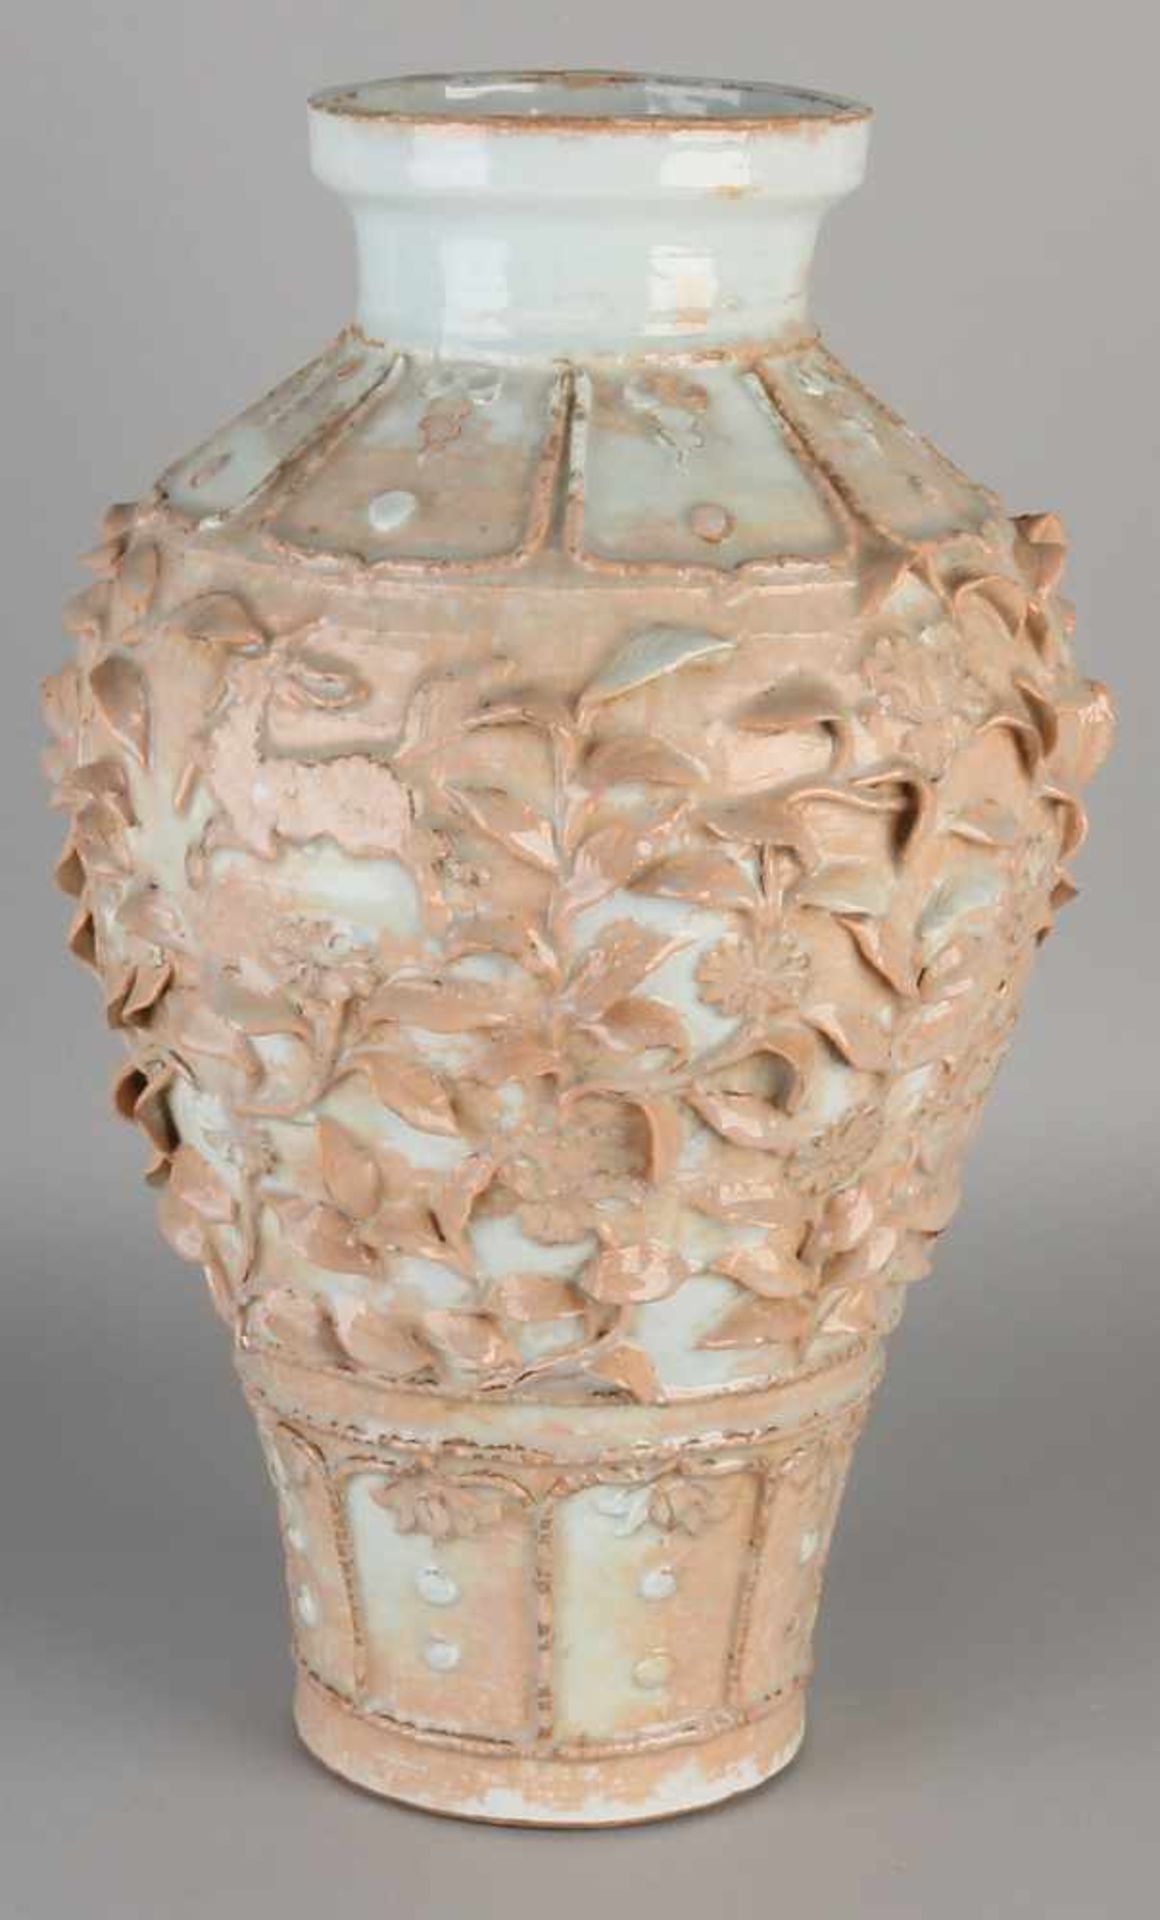 Large Chinese porcelain vase with flowers reprocessed. White-brown glaze. Minimal enamel damage.